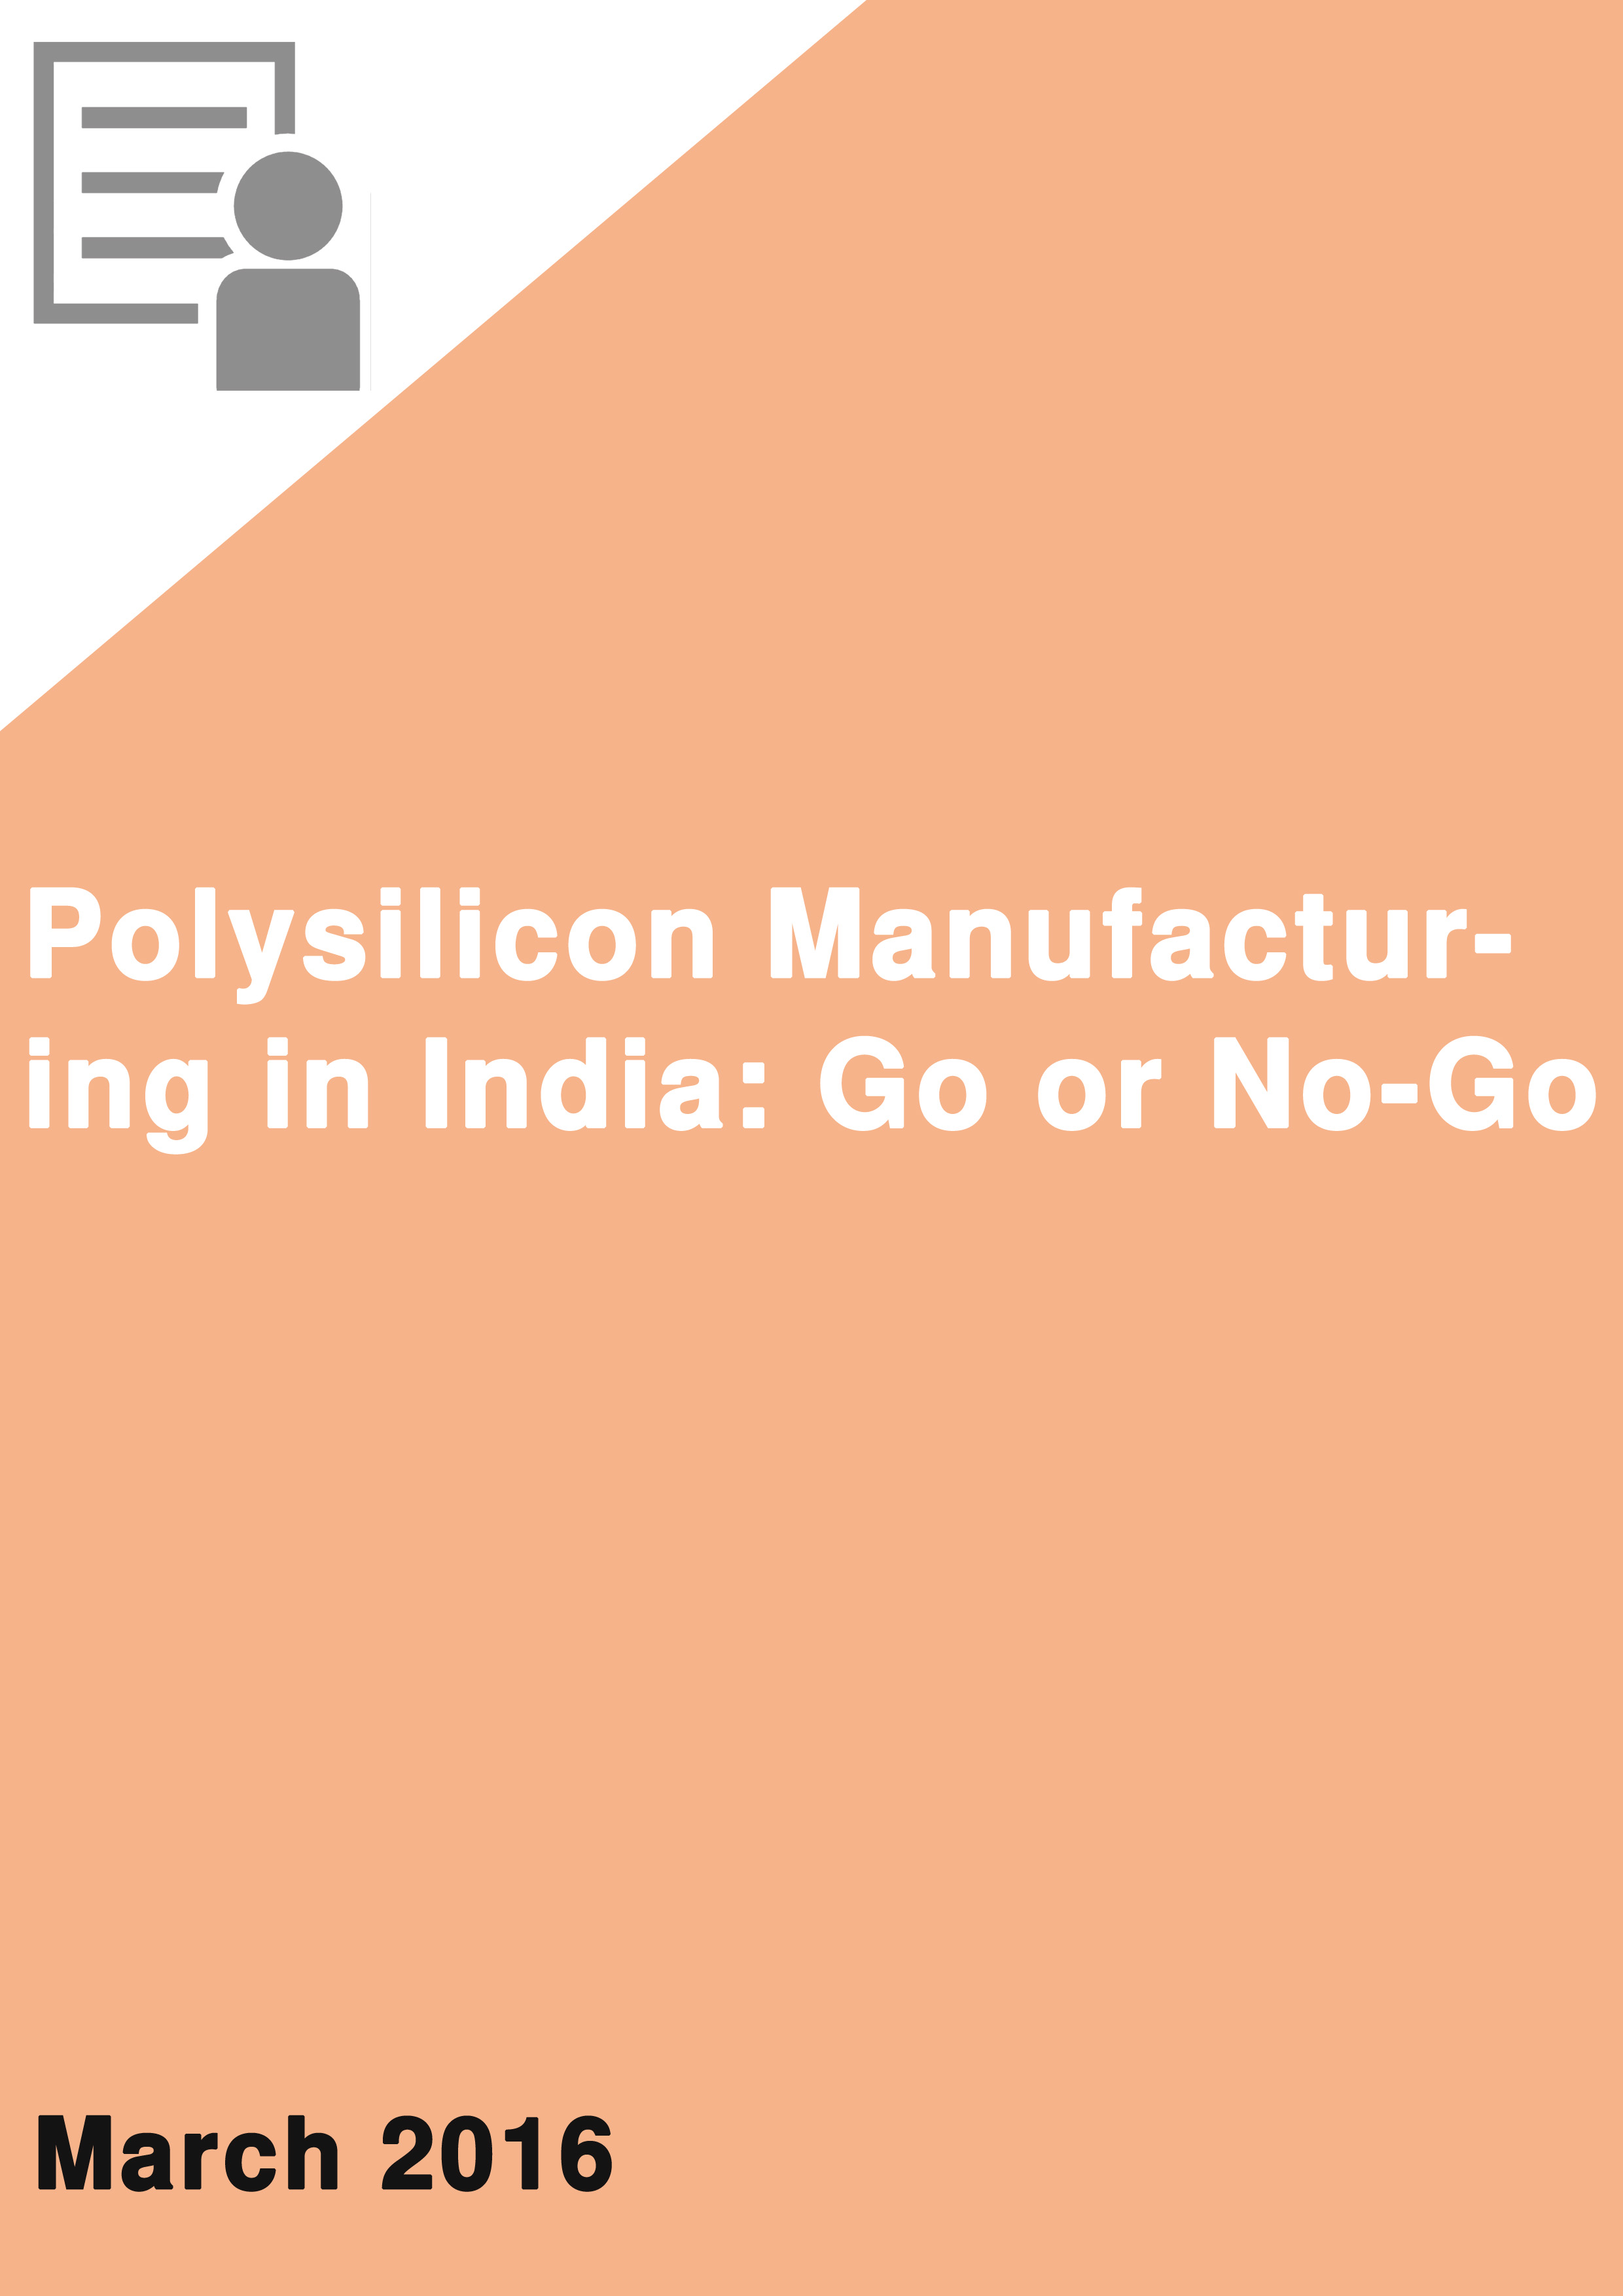 Polysilicon Manufacturing in India: Go or No-Go